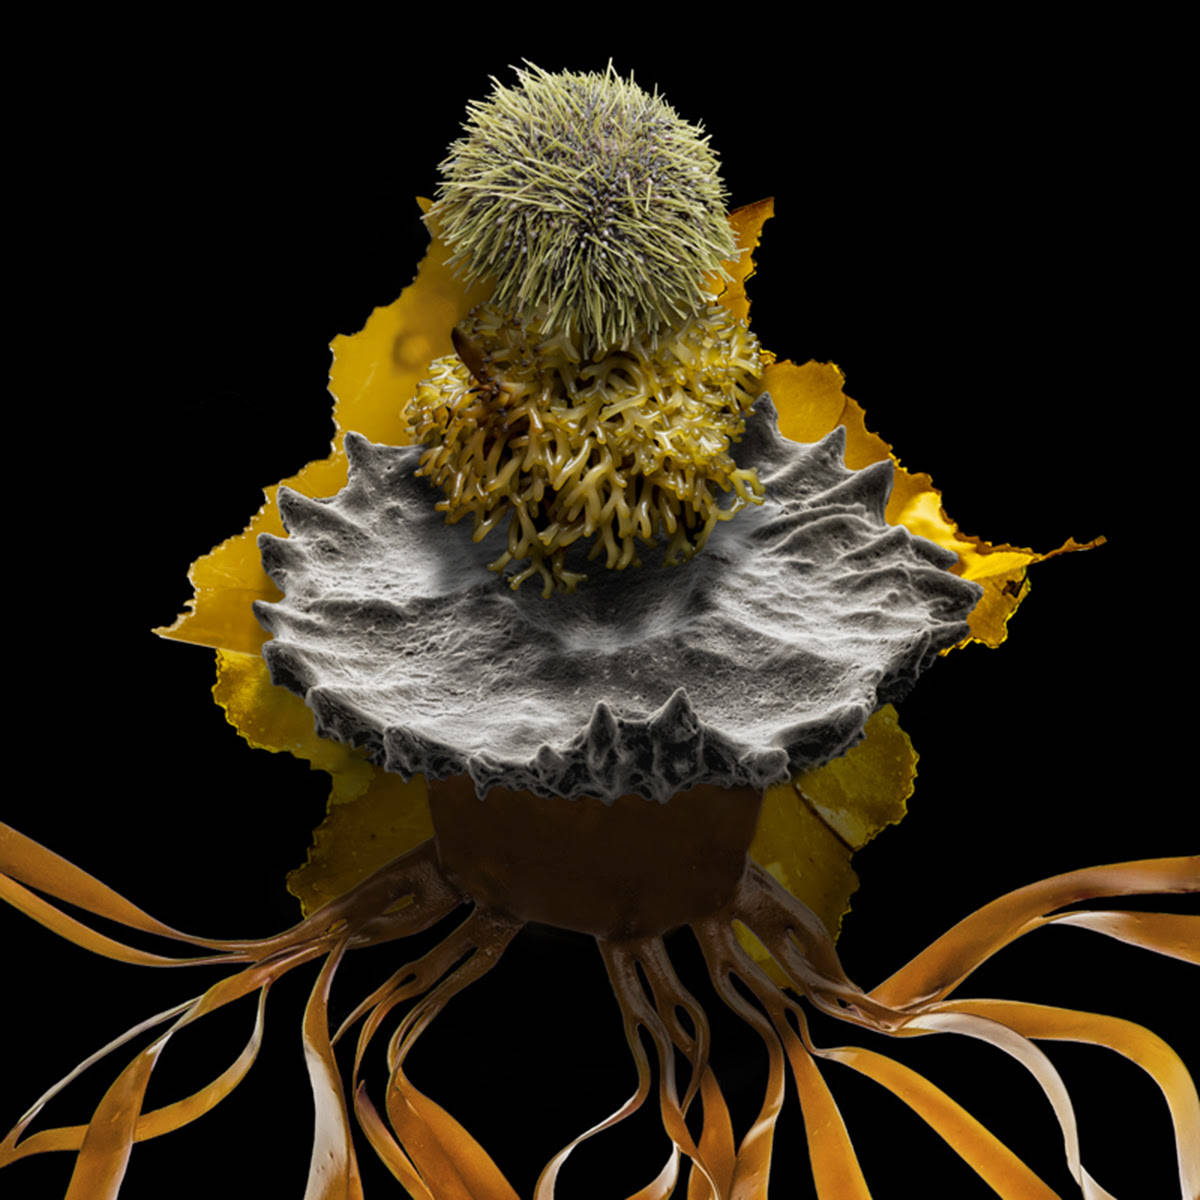 Urchin takes kelp. (Robert Dash/contributed photo)